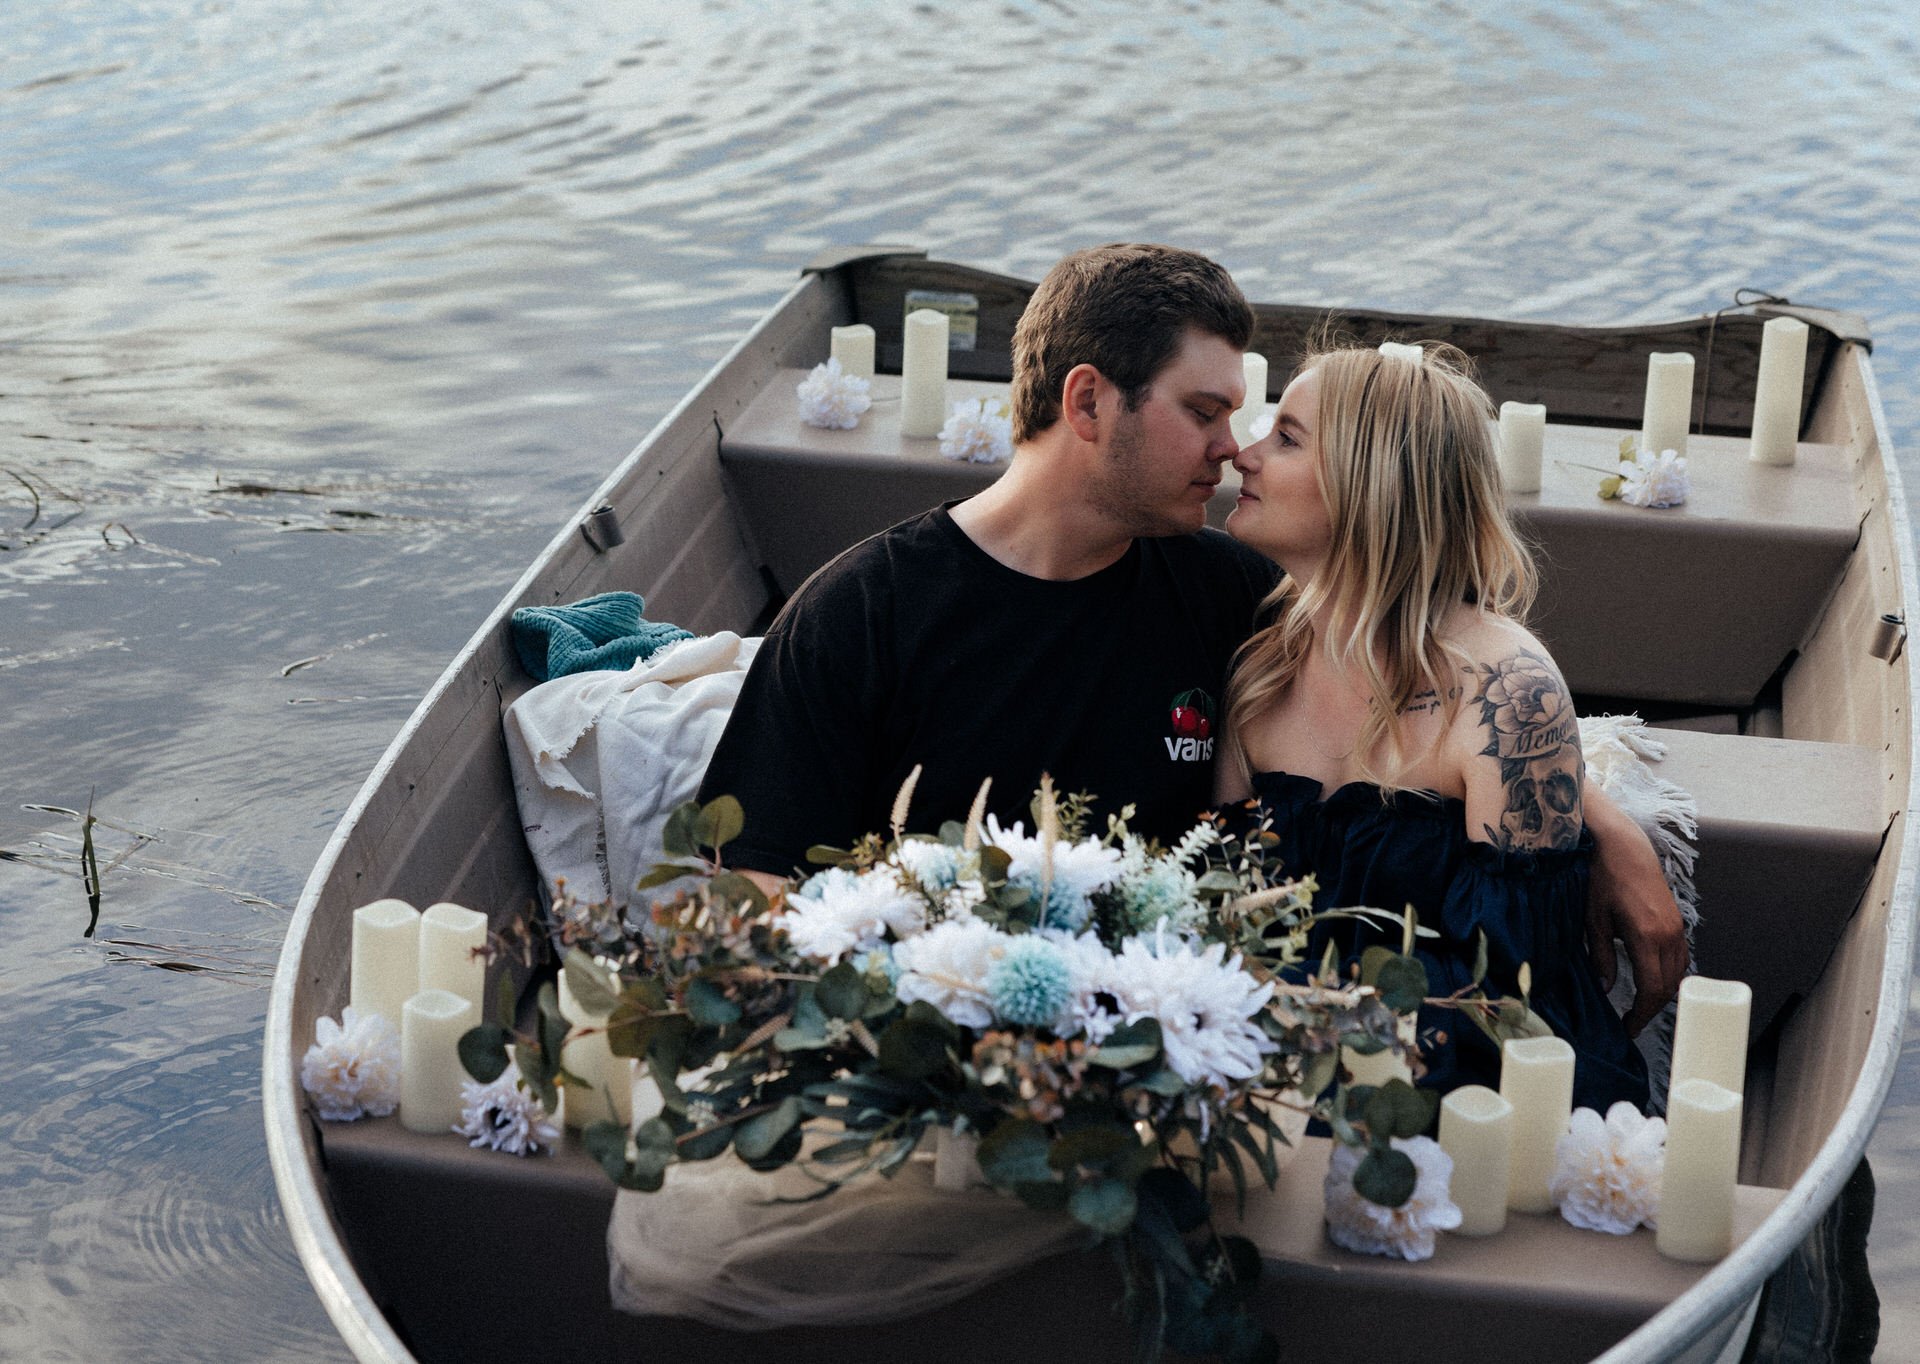 Canoe Couples Photoshoot in Alberta